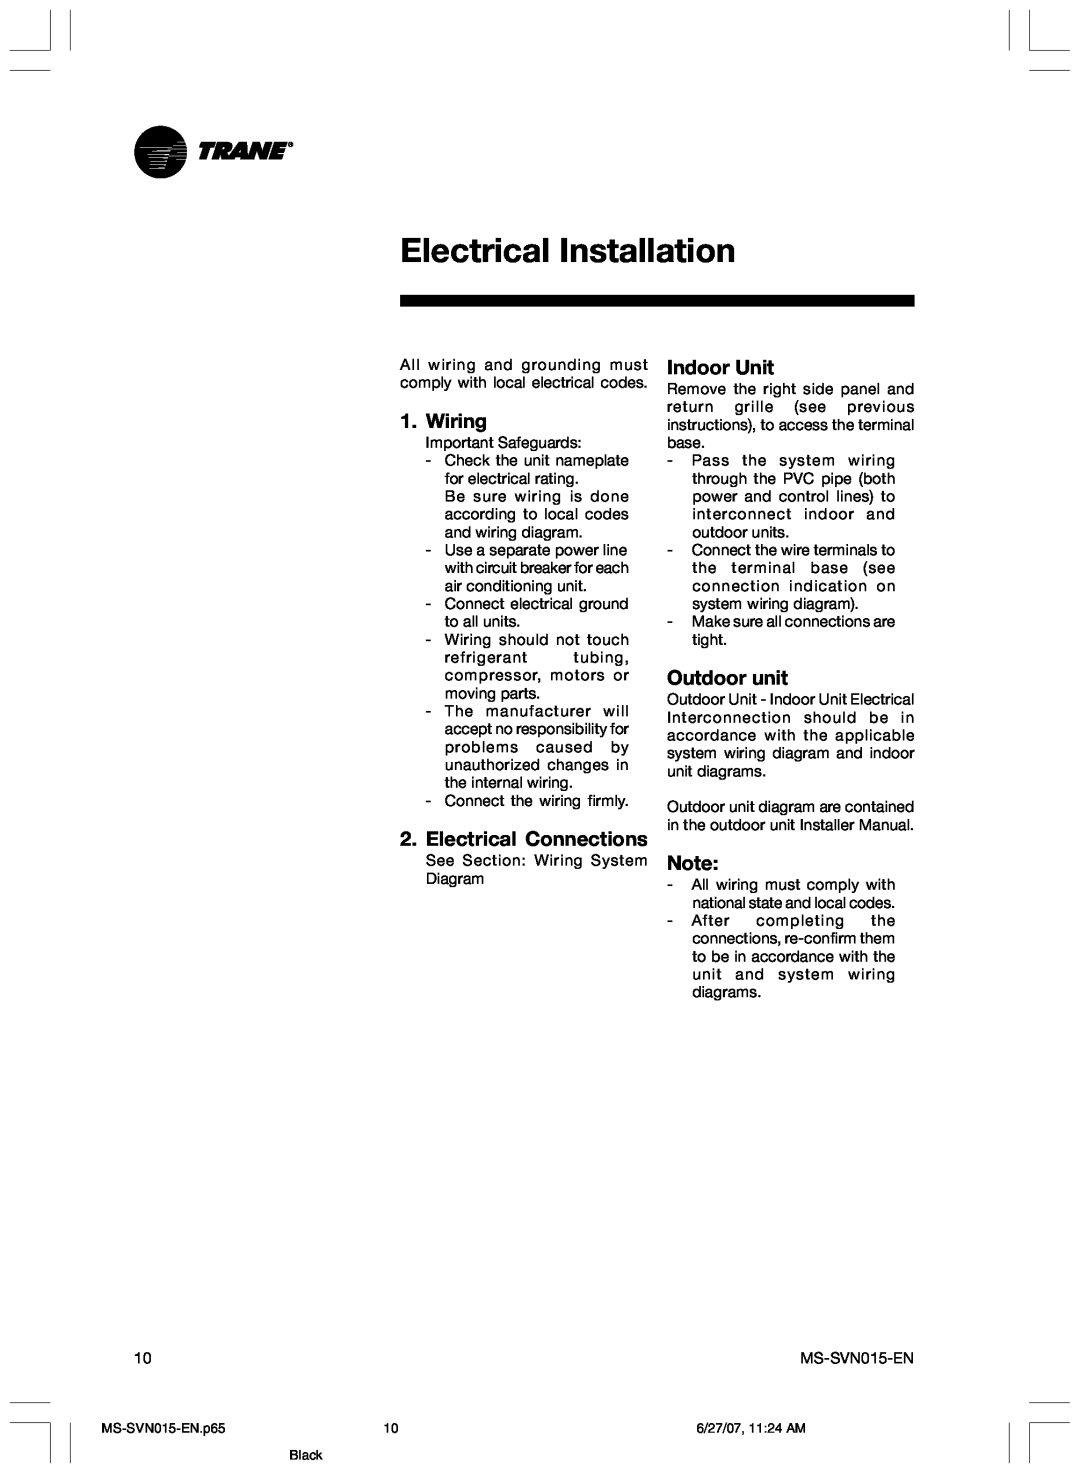 Trane MS-SVN015-EN installation manual Electrical Installation, Wiring, Electrical Connections, Indoor Unit, Outdoor unit 